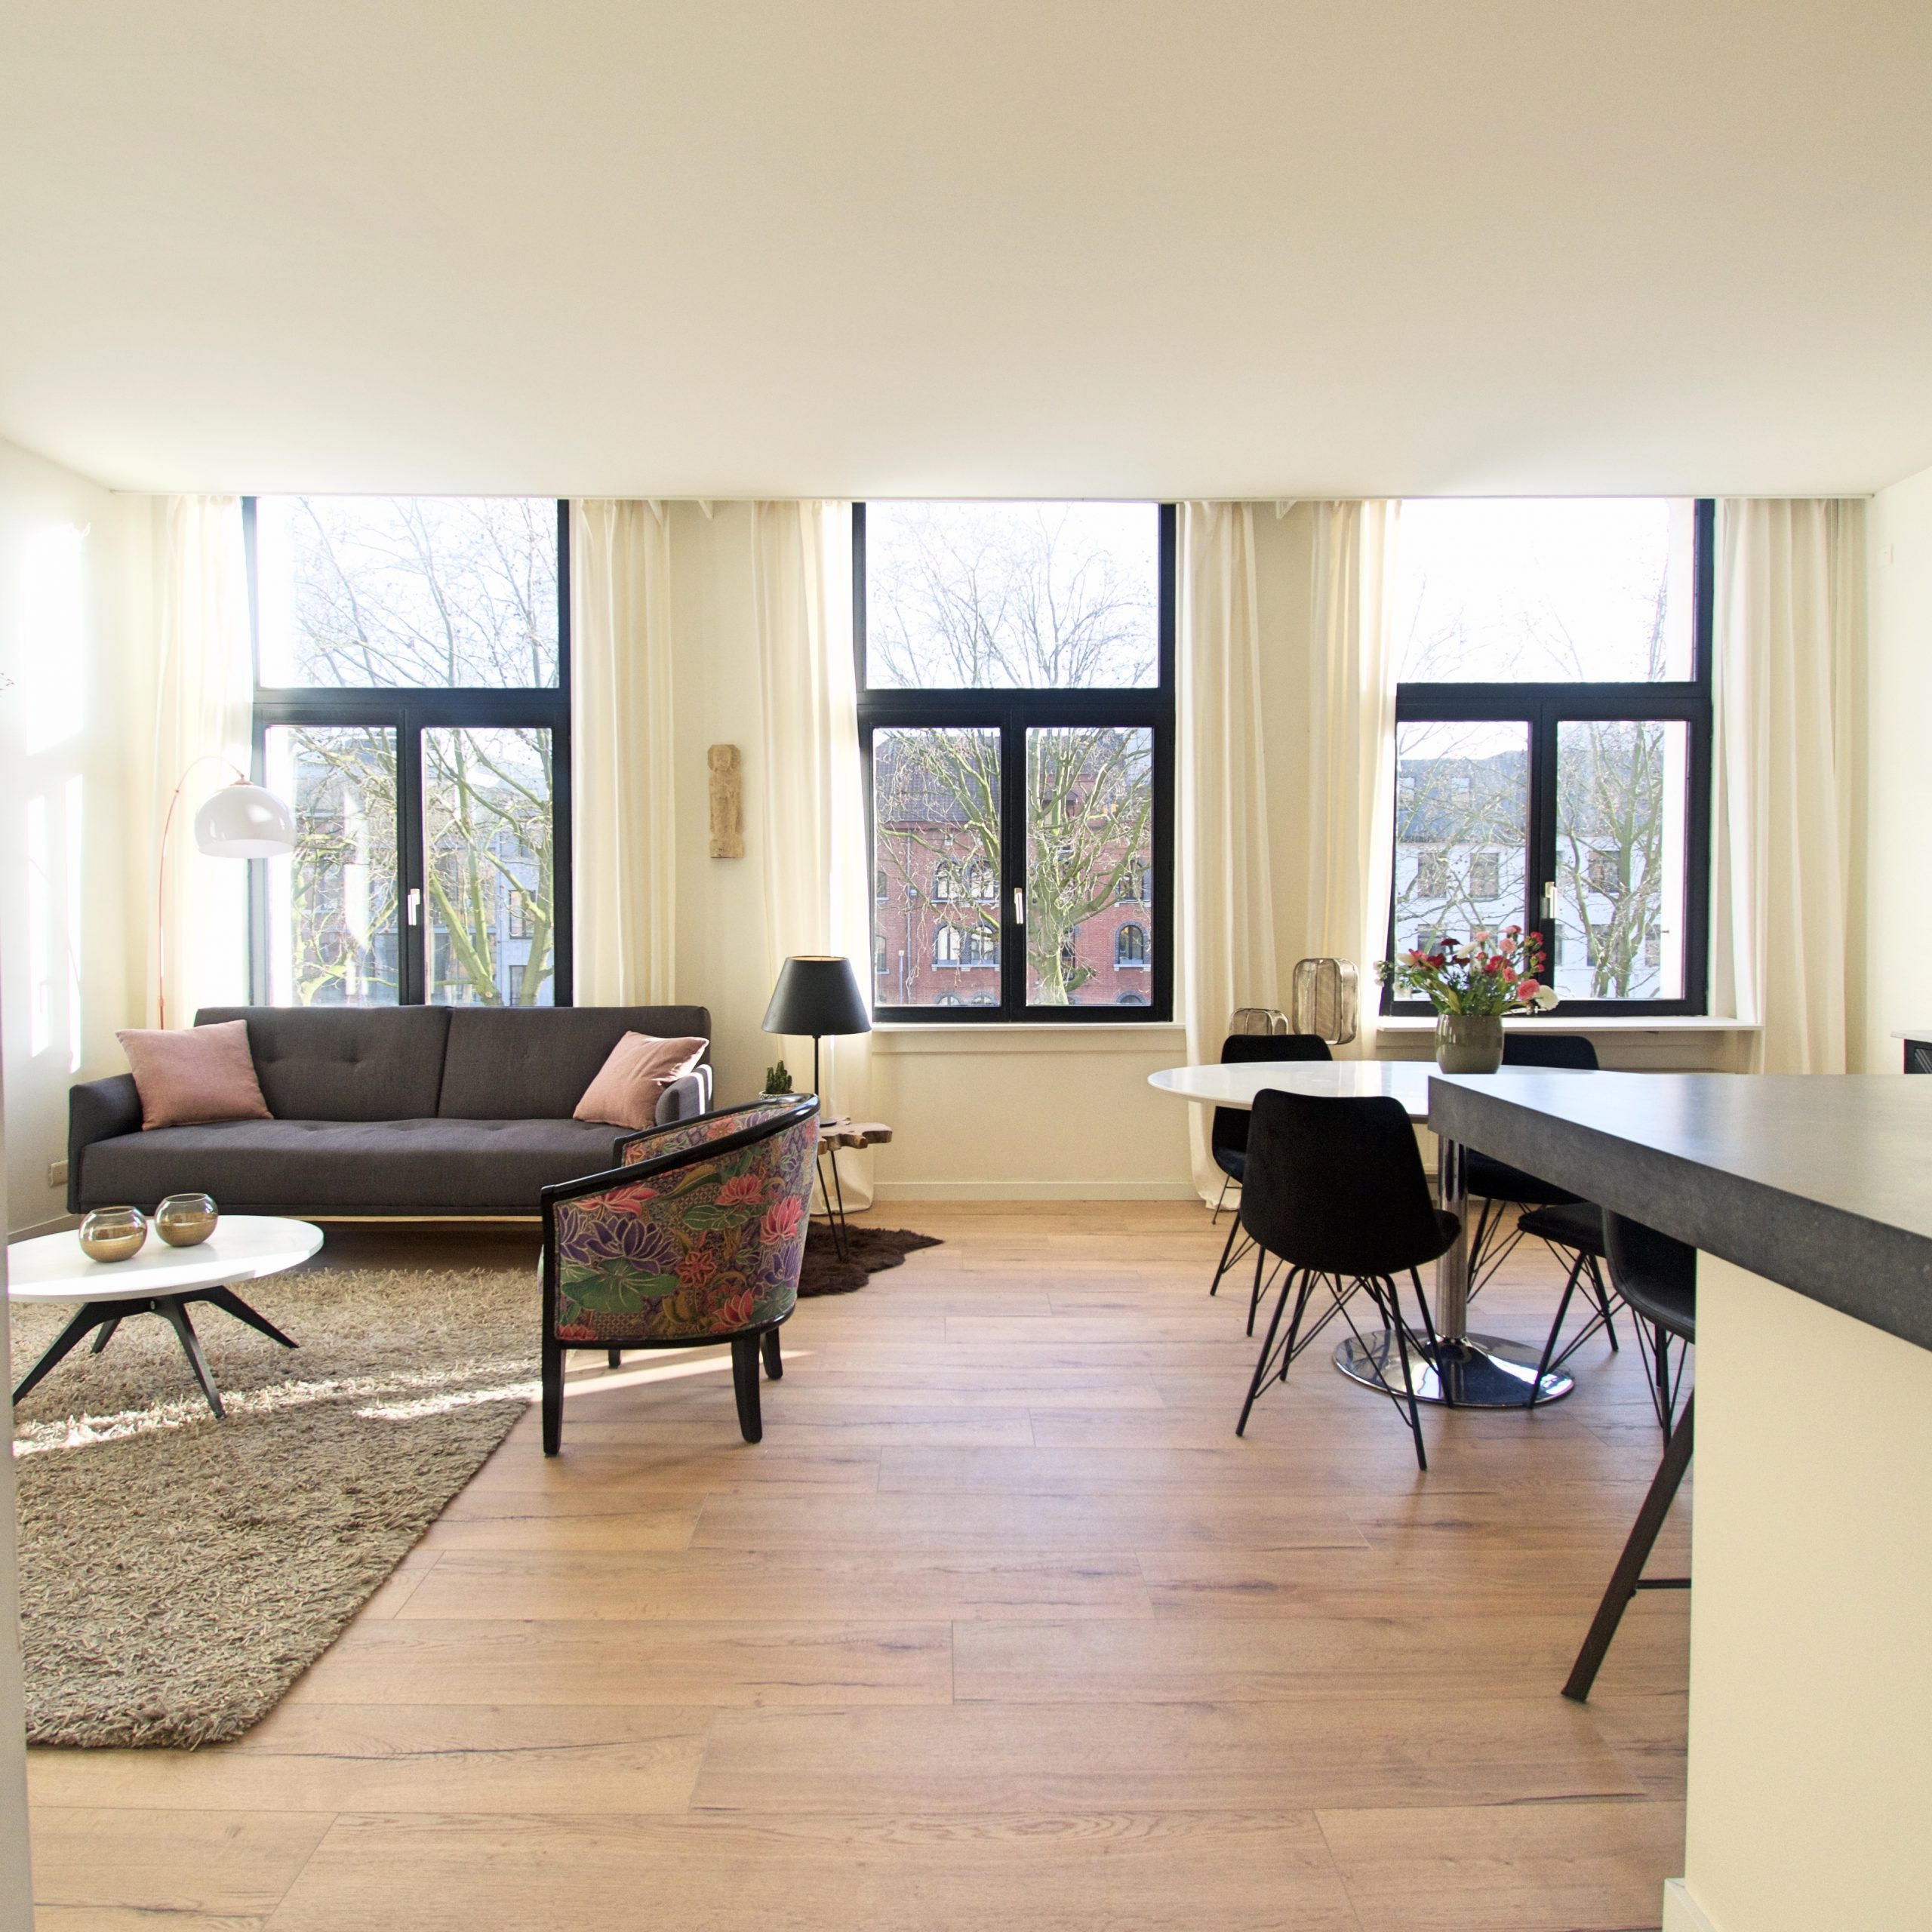 Leeuwenrui 2 - Luxury flat in Antwerp for rent